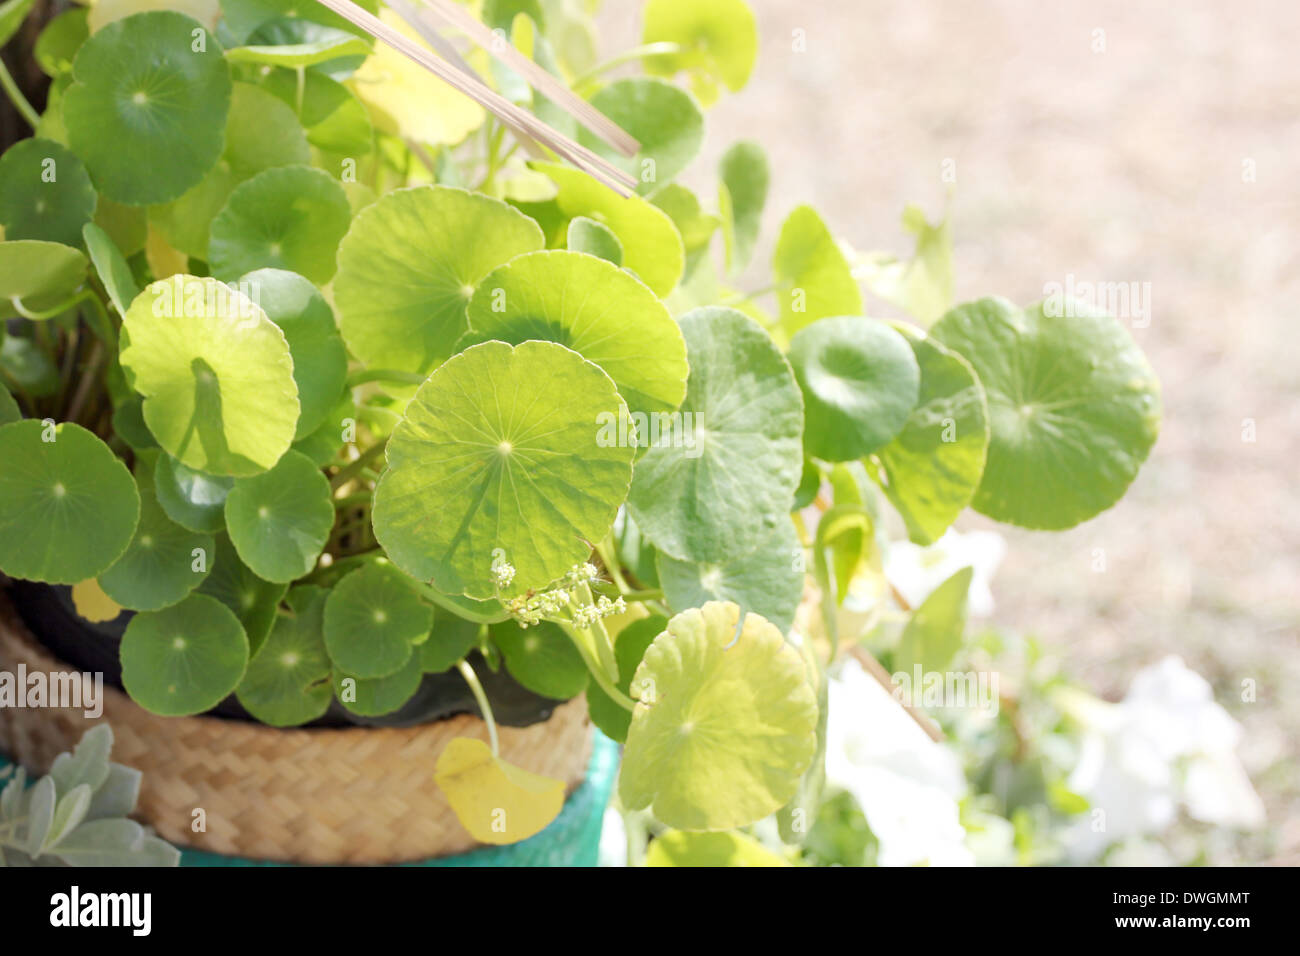 Green Leaf of Centella asiatica in jardiniere. Stock Photo